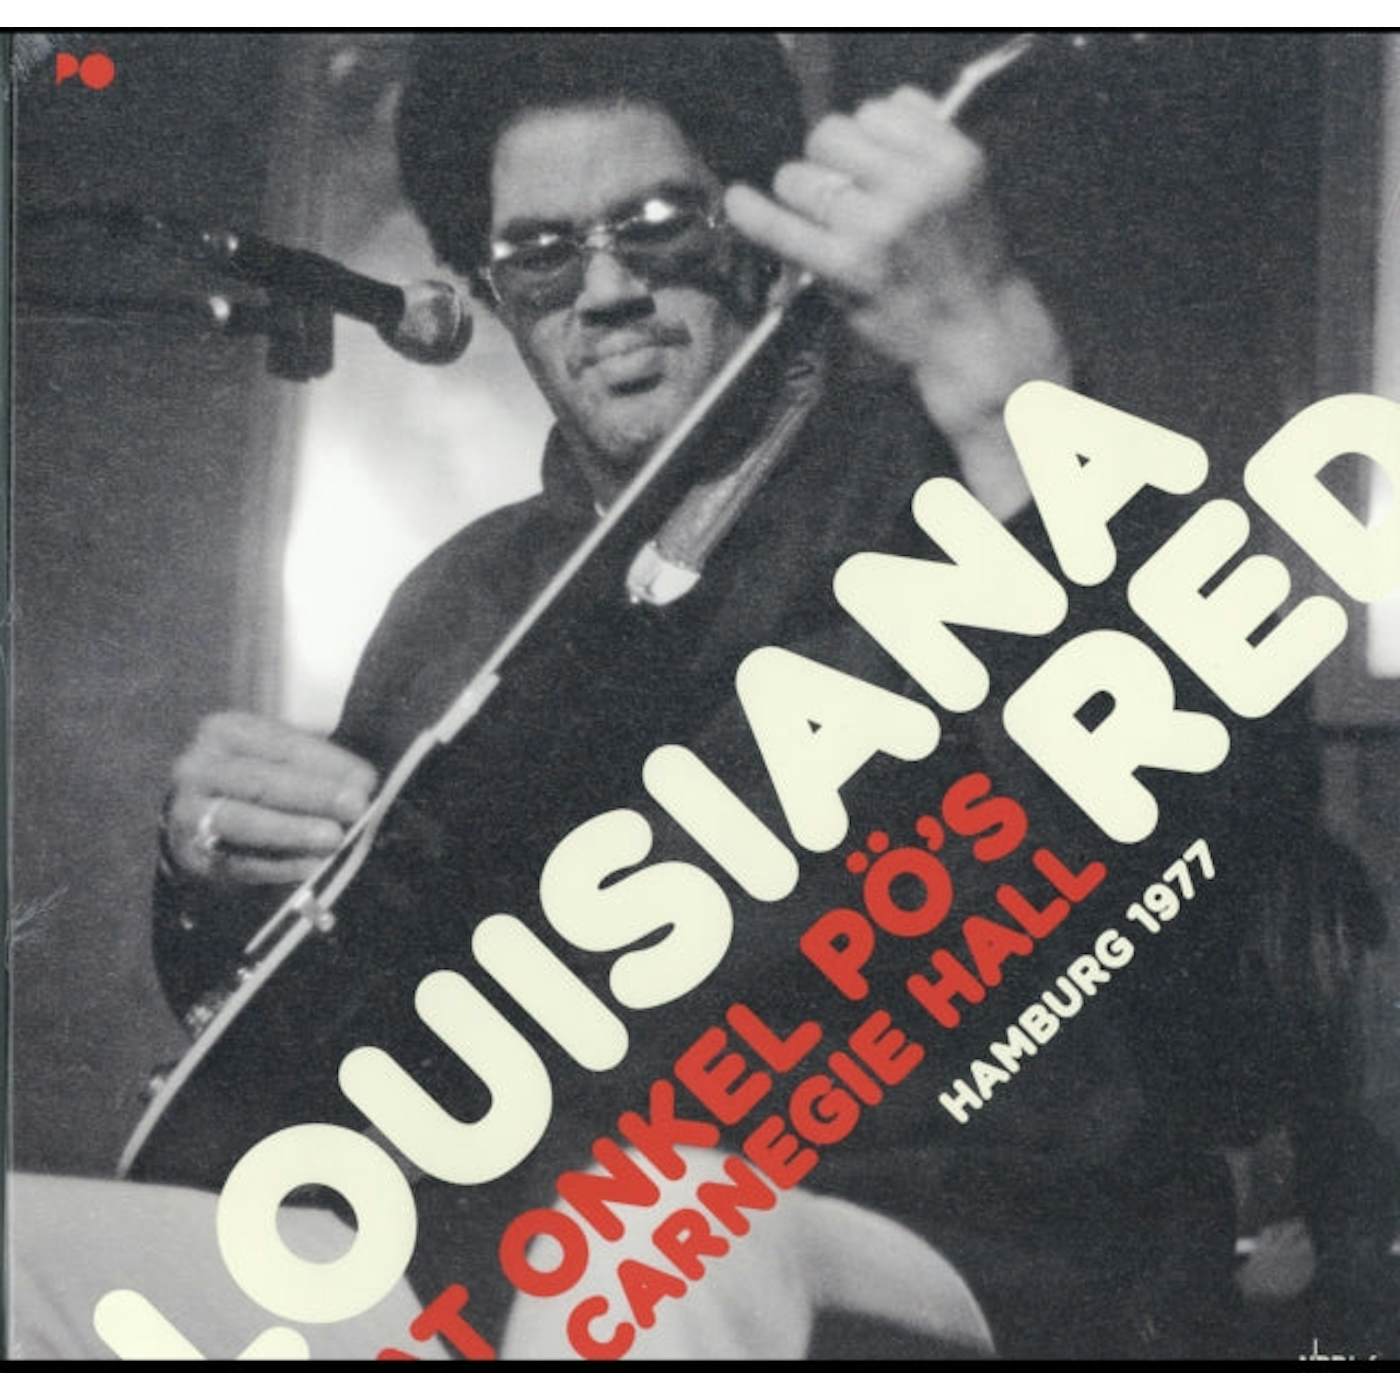 Louisiana Red LP - At Onkel Pos Carnegie Hall 77 (Vinyl)